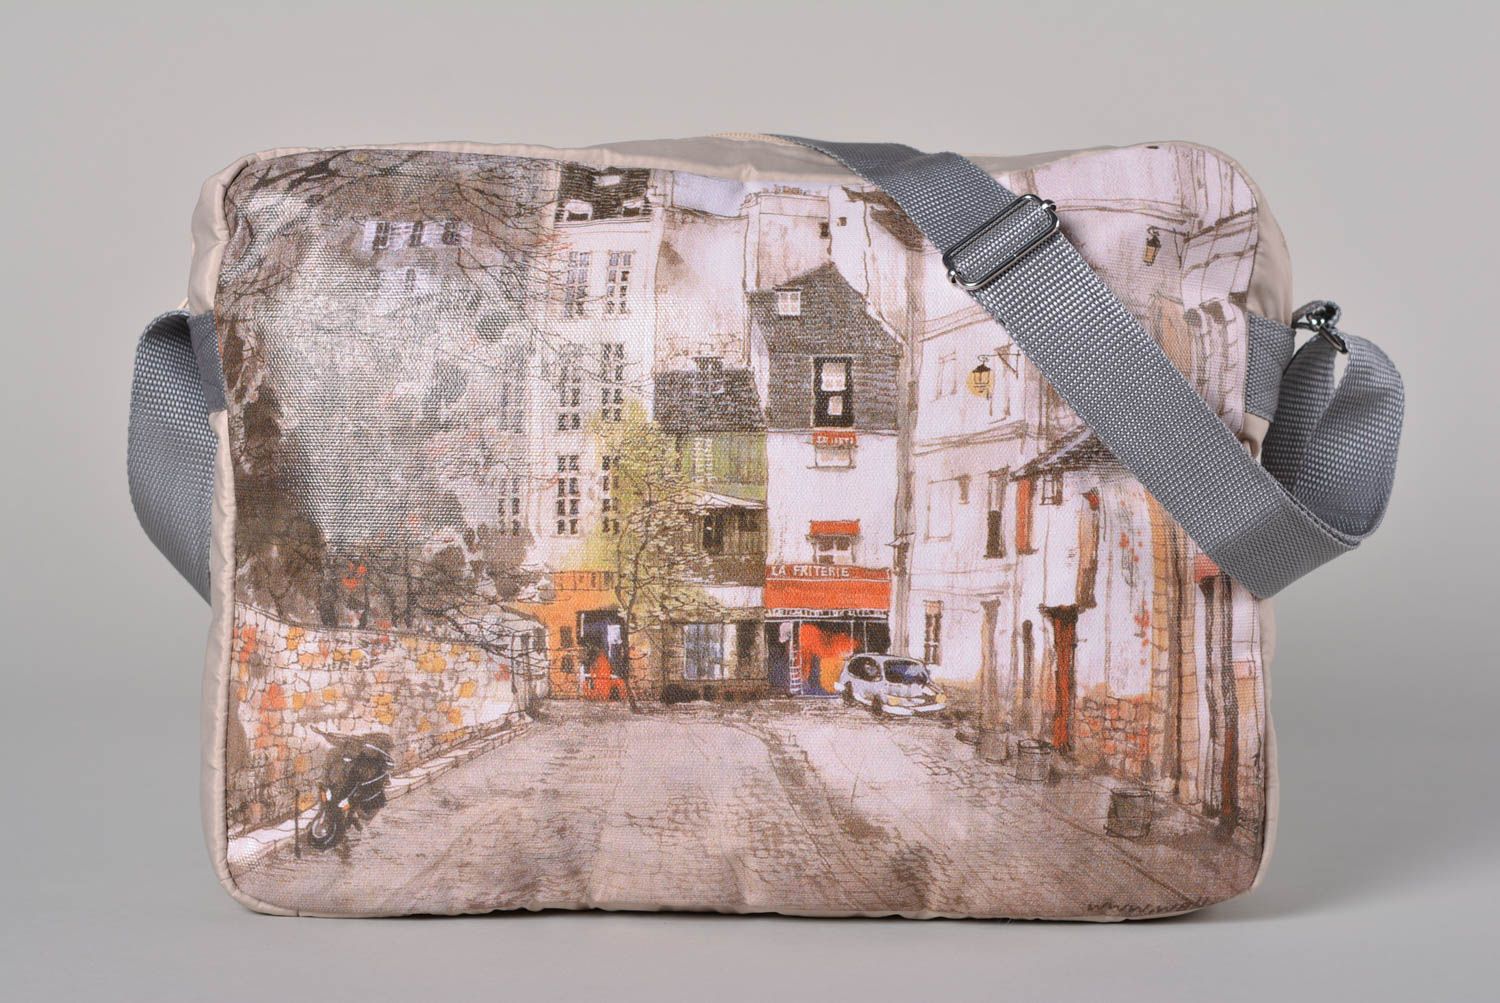 Sac bandoulière Sac fait main tissu imperméable paysage urbain Cadeau femme photo 1